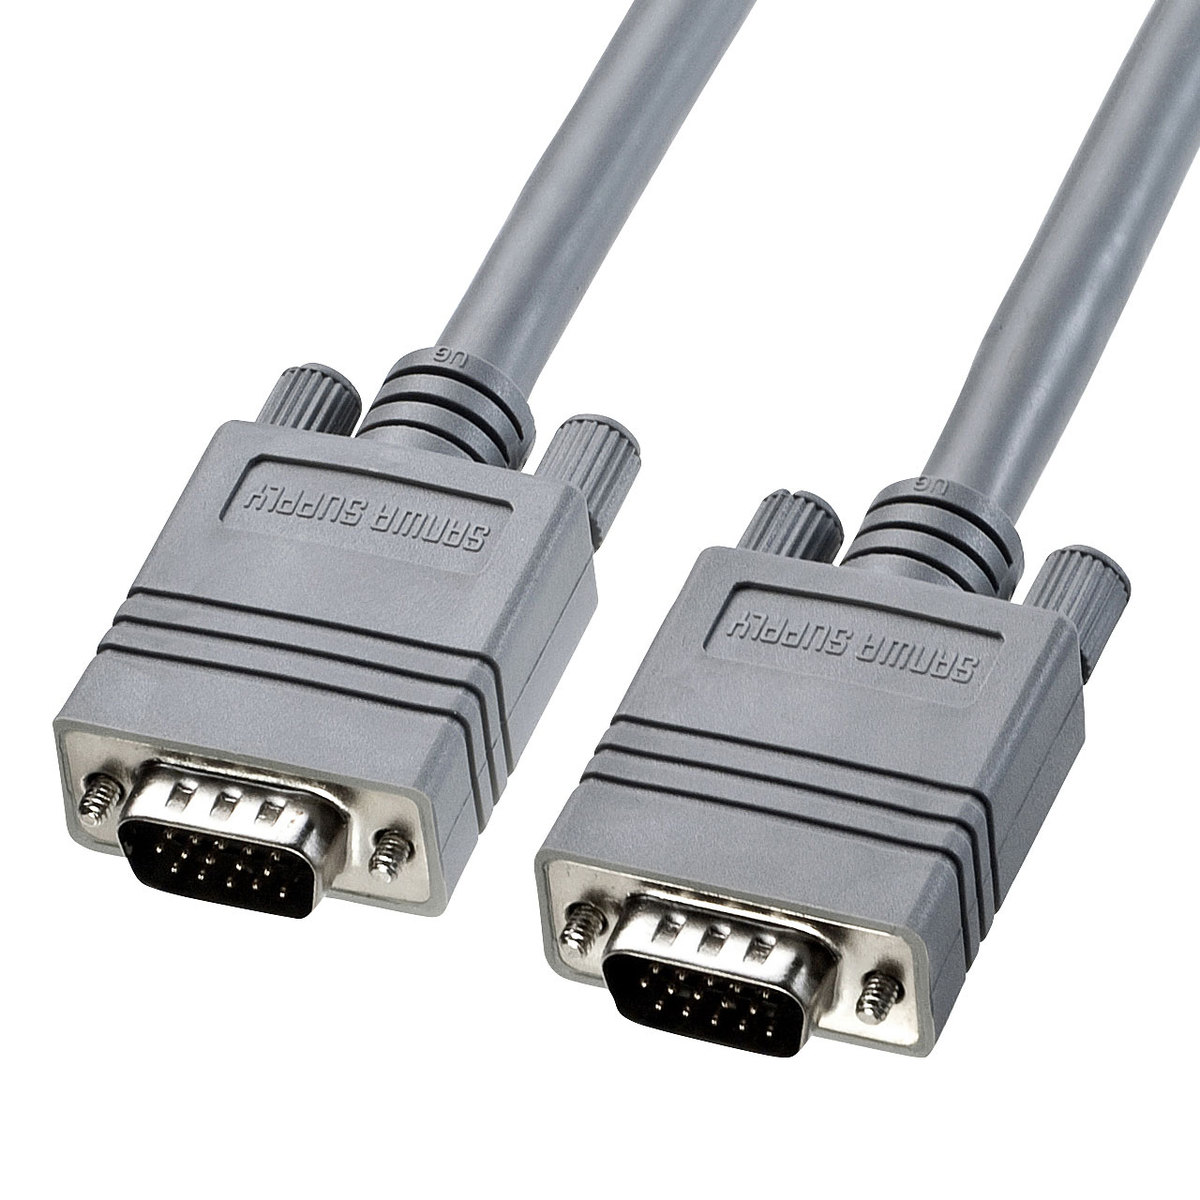 Display Cable (Compound Coaxial / Analog RGB), KB-CHD Series (KB-CHD154K2) 